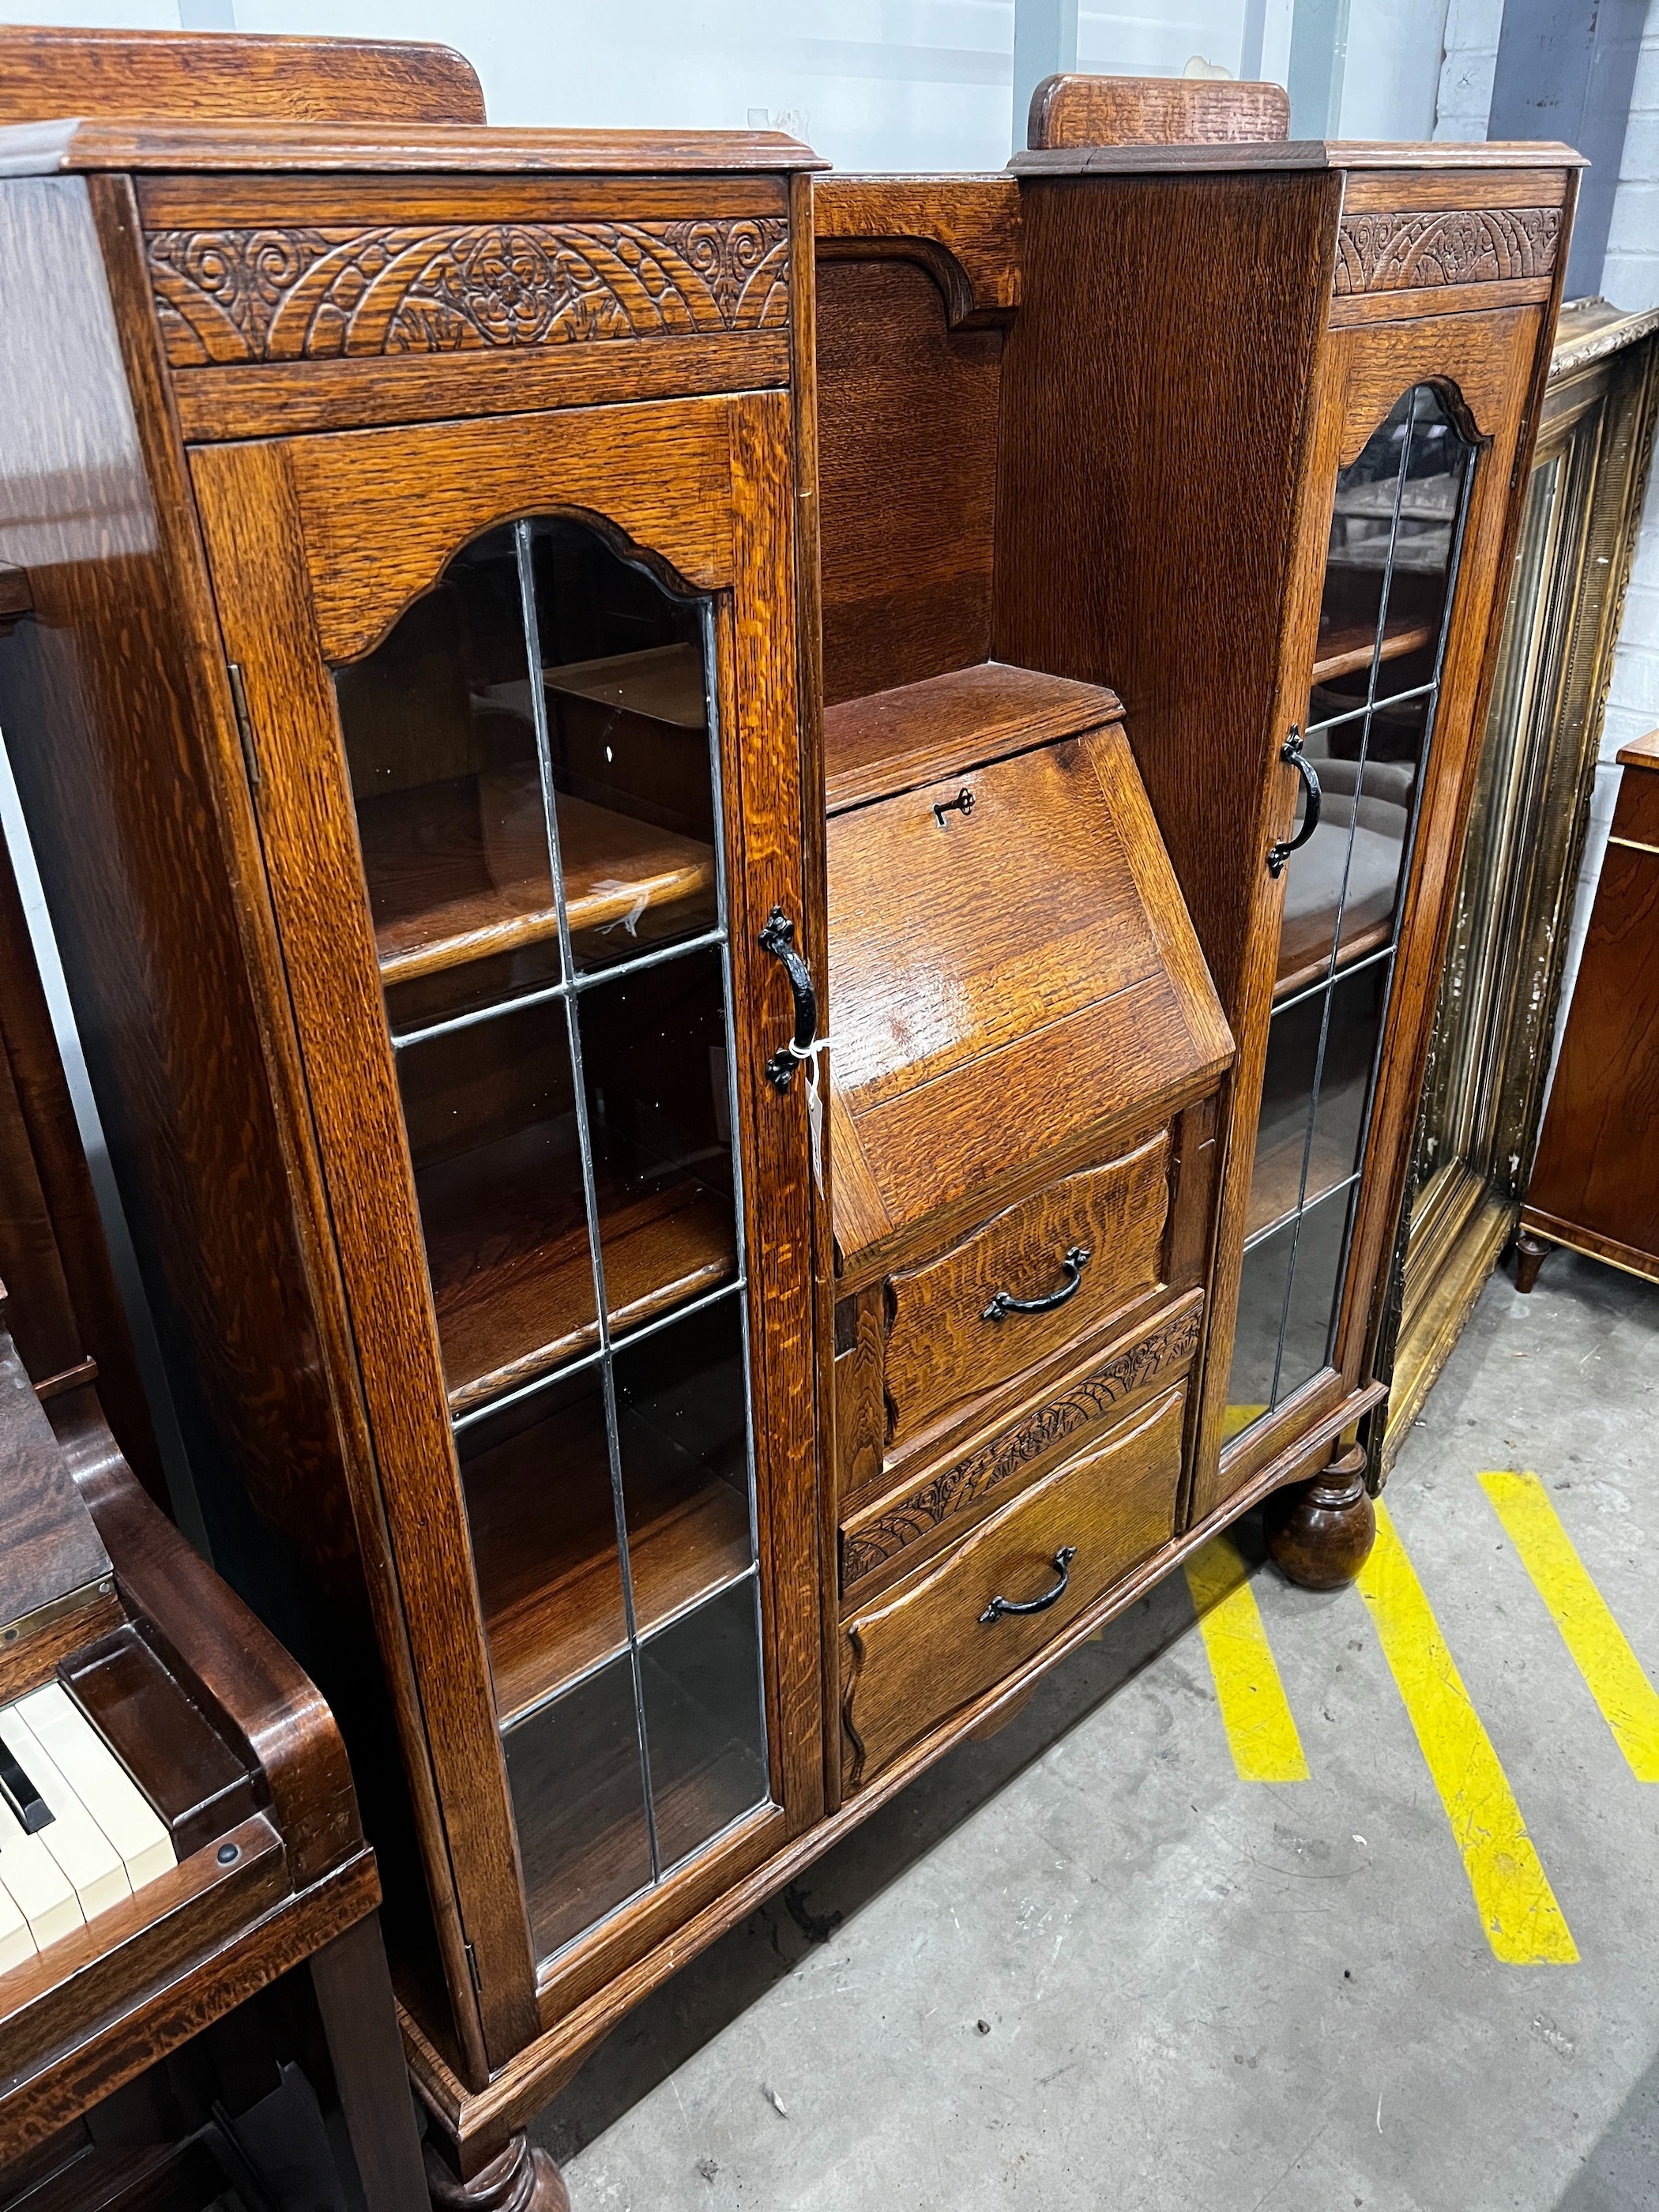 An early 20th century oak bureau bookcase, length 120cm, depth 28cm, height 154cm